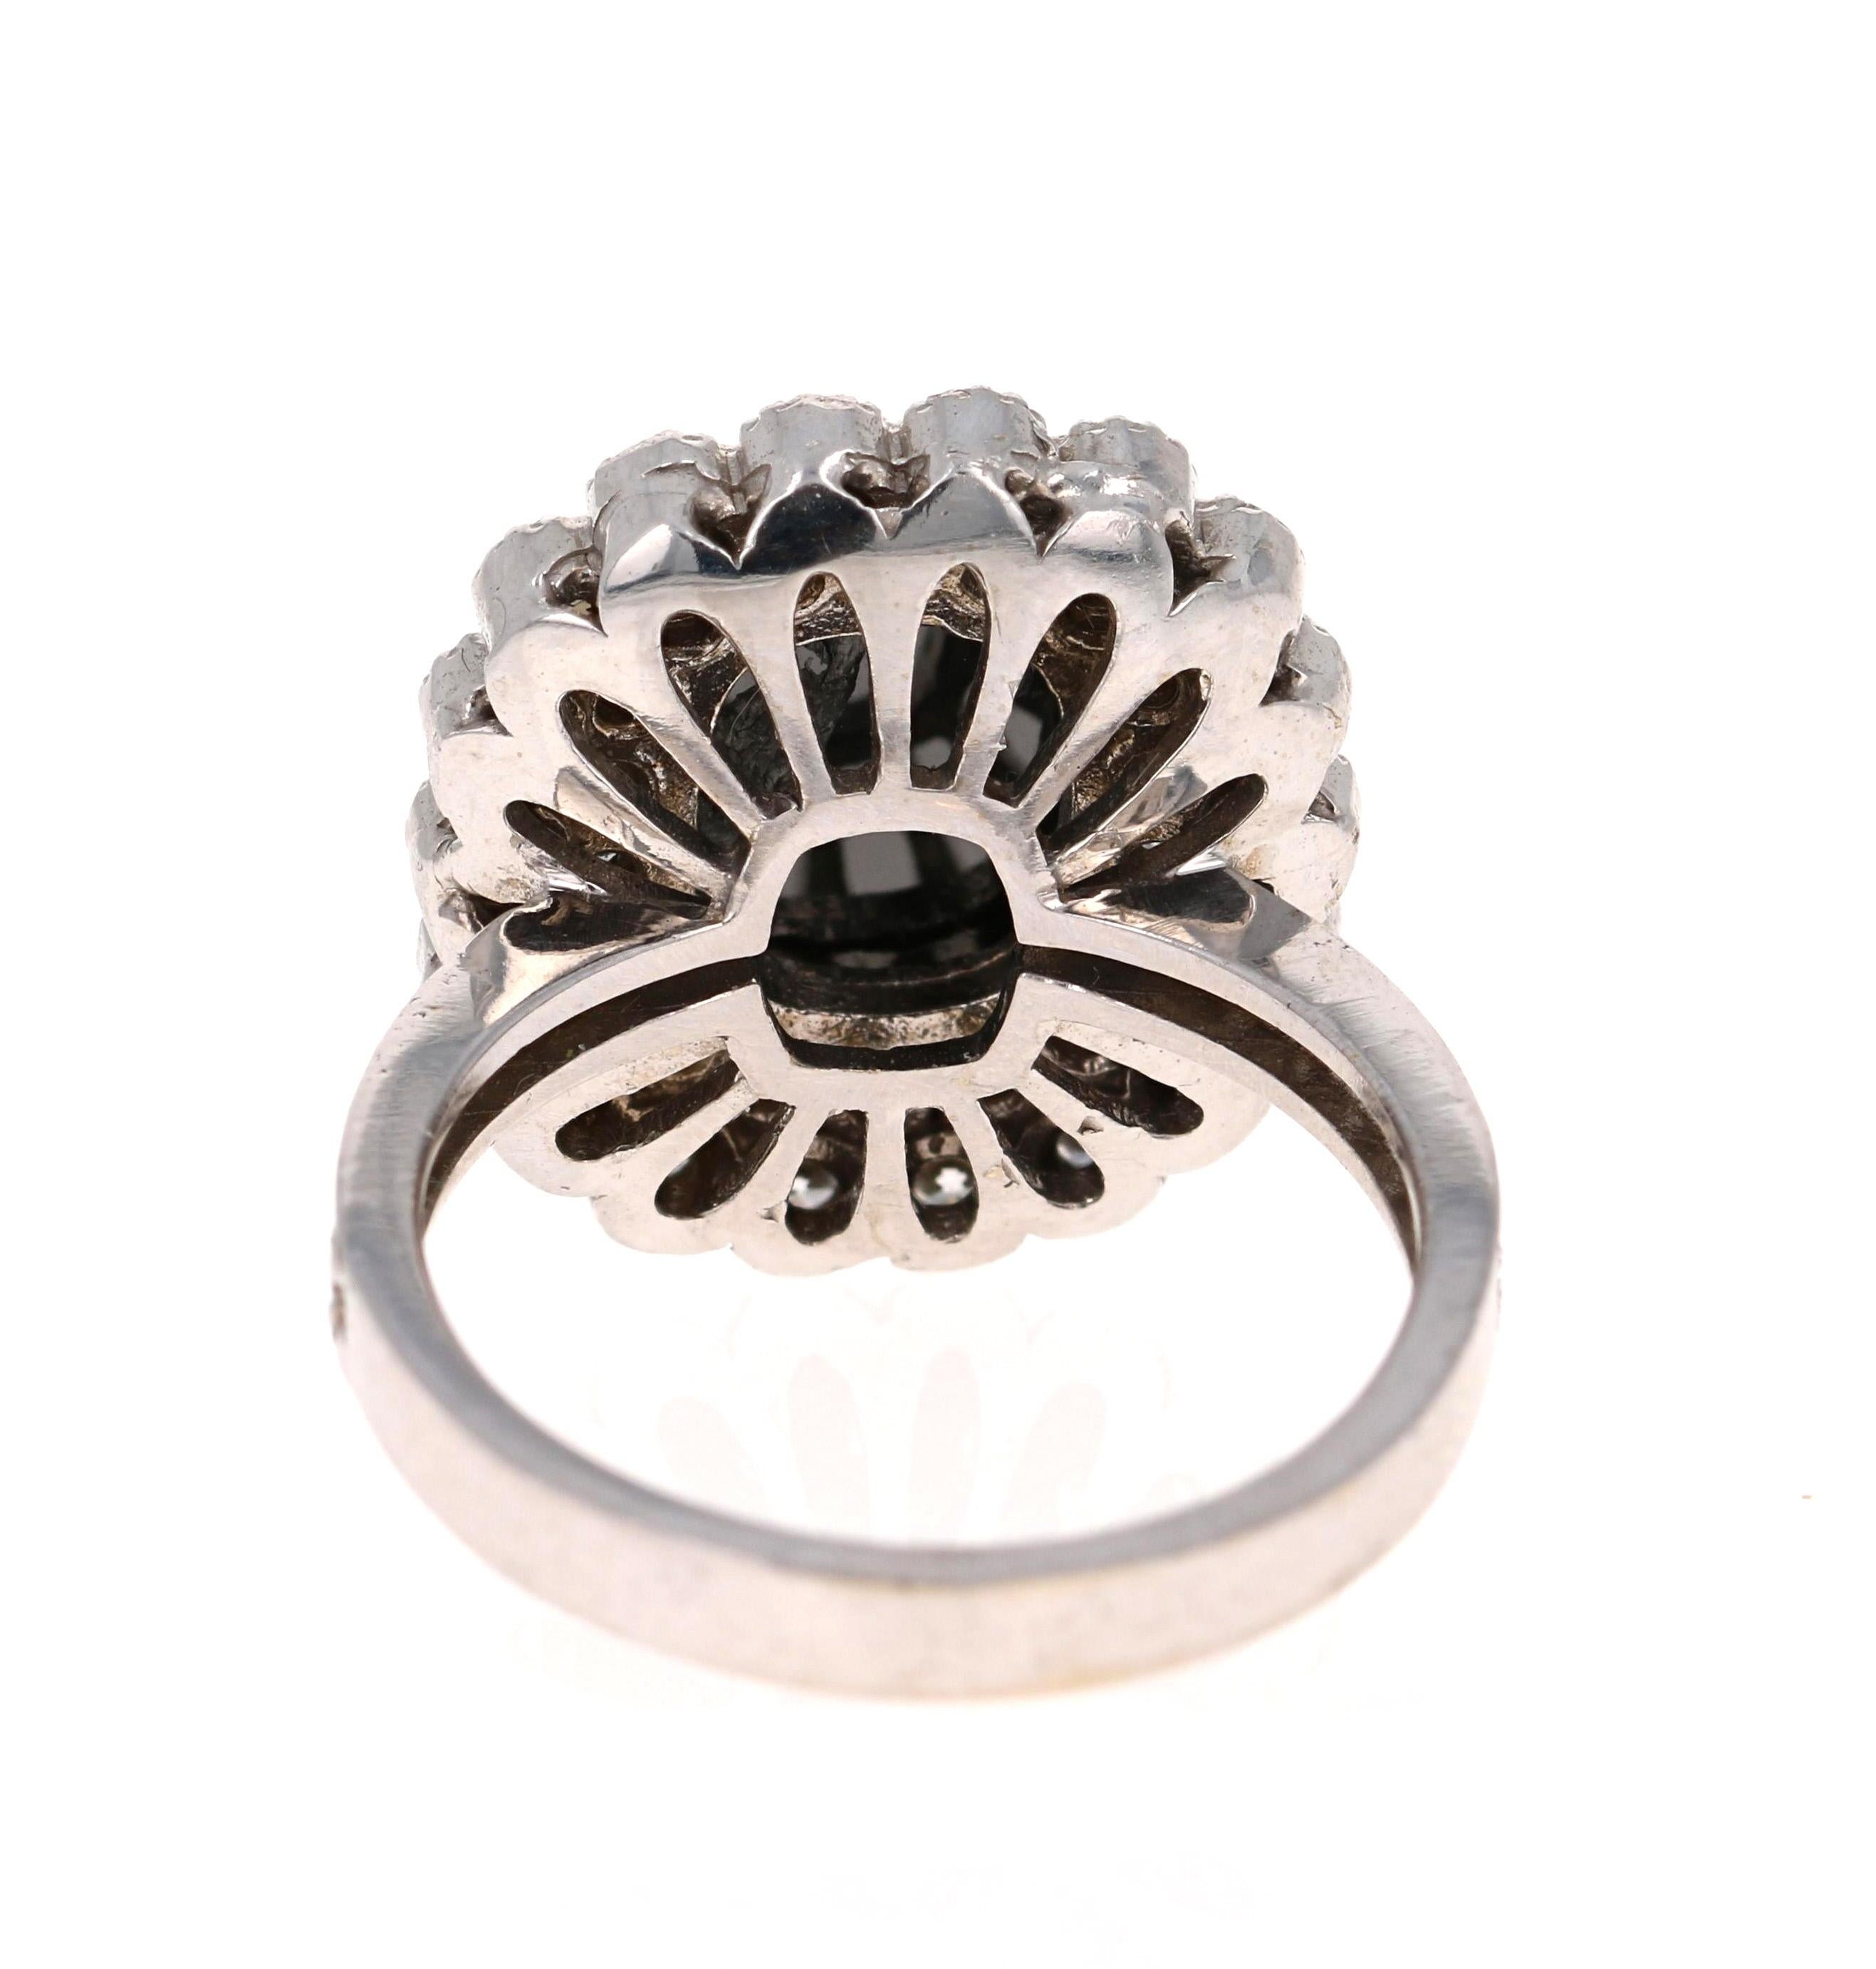 Contemporary 4.46 Carat Oval Cut Black Diamond 14 Karat White Gold Engagement Ring For Sale